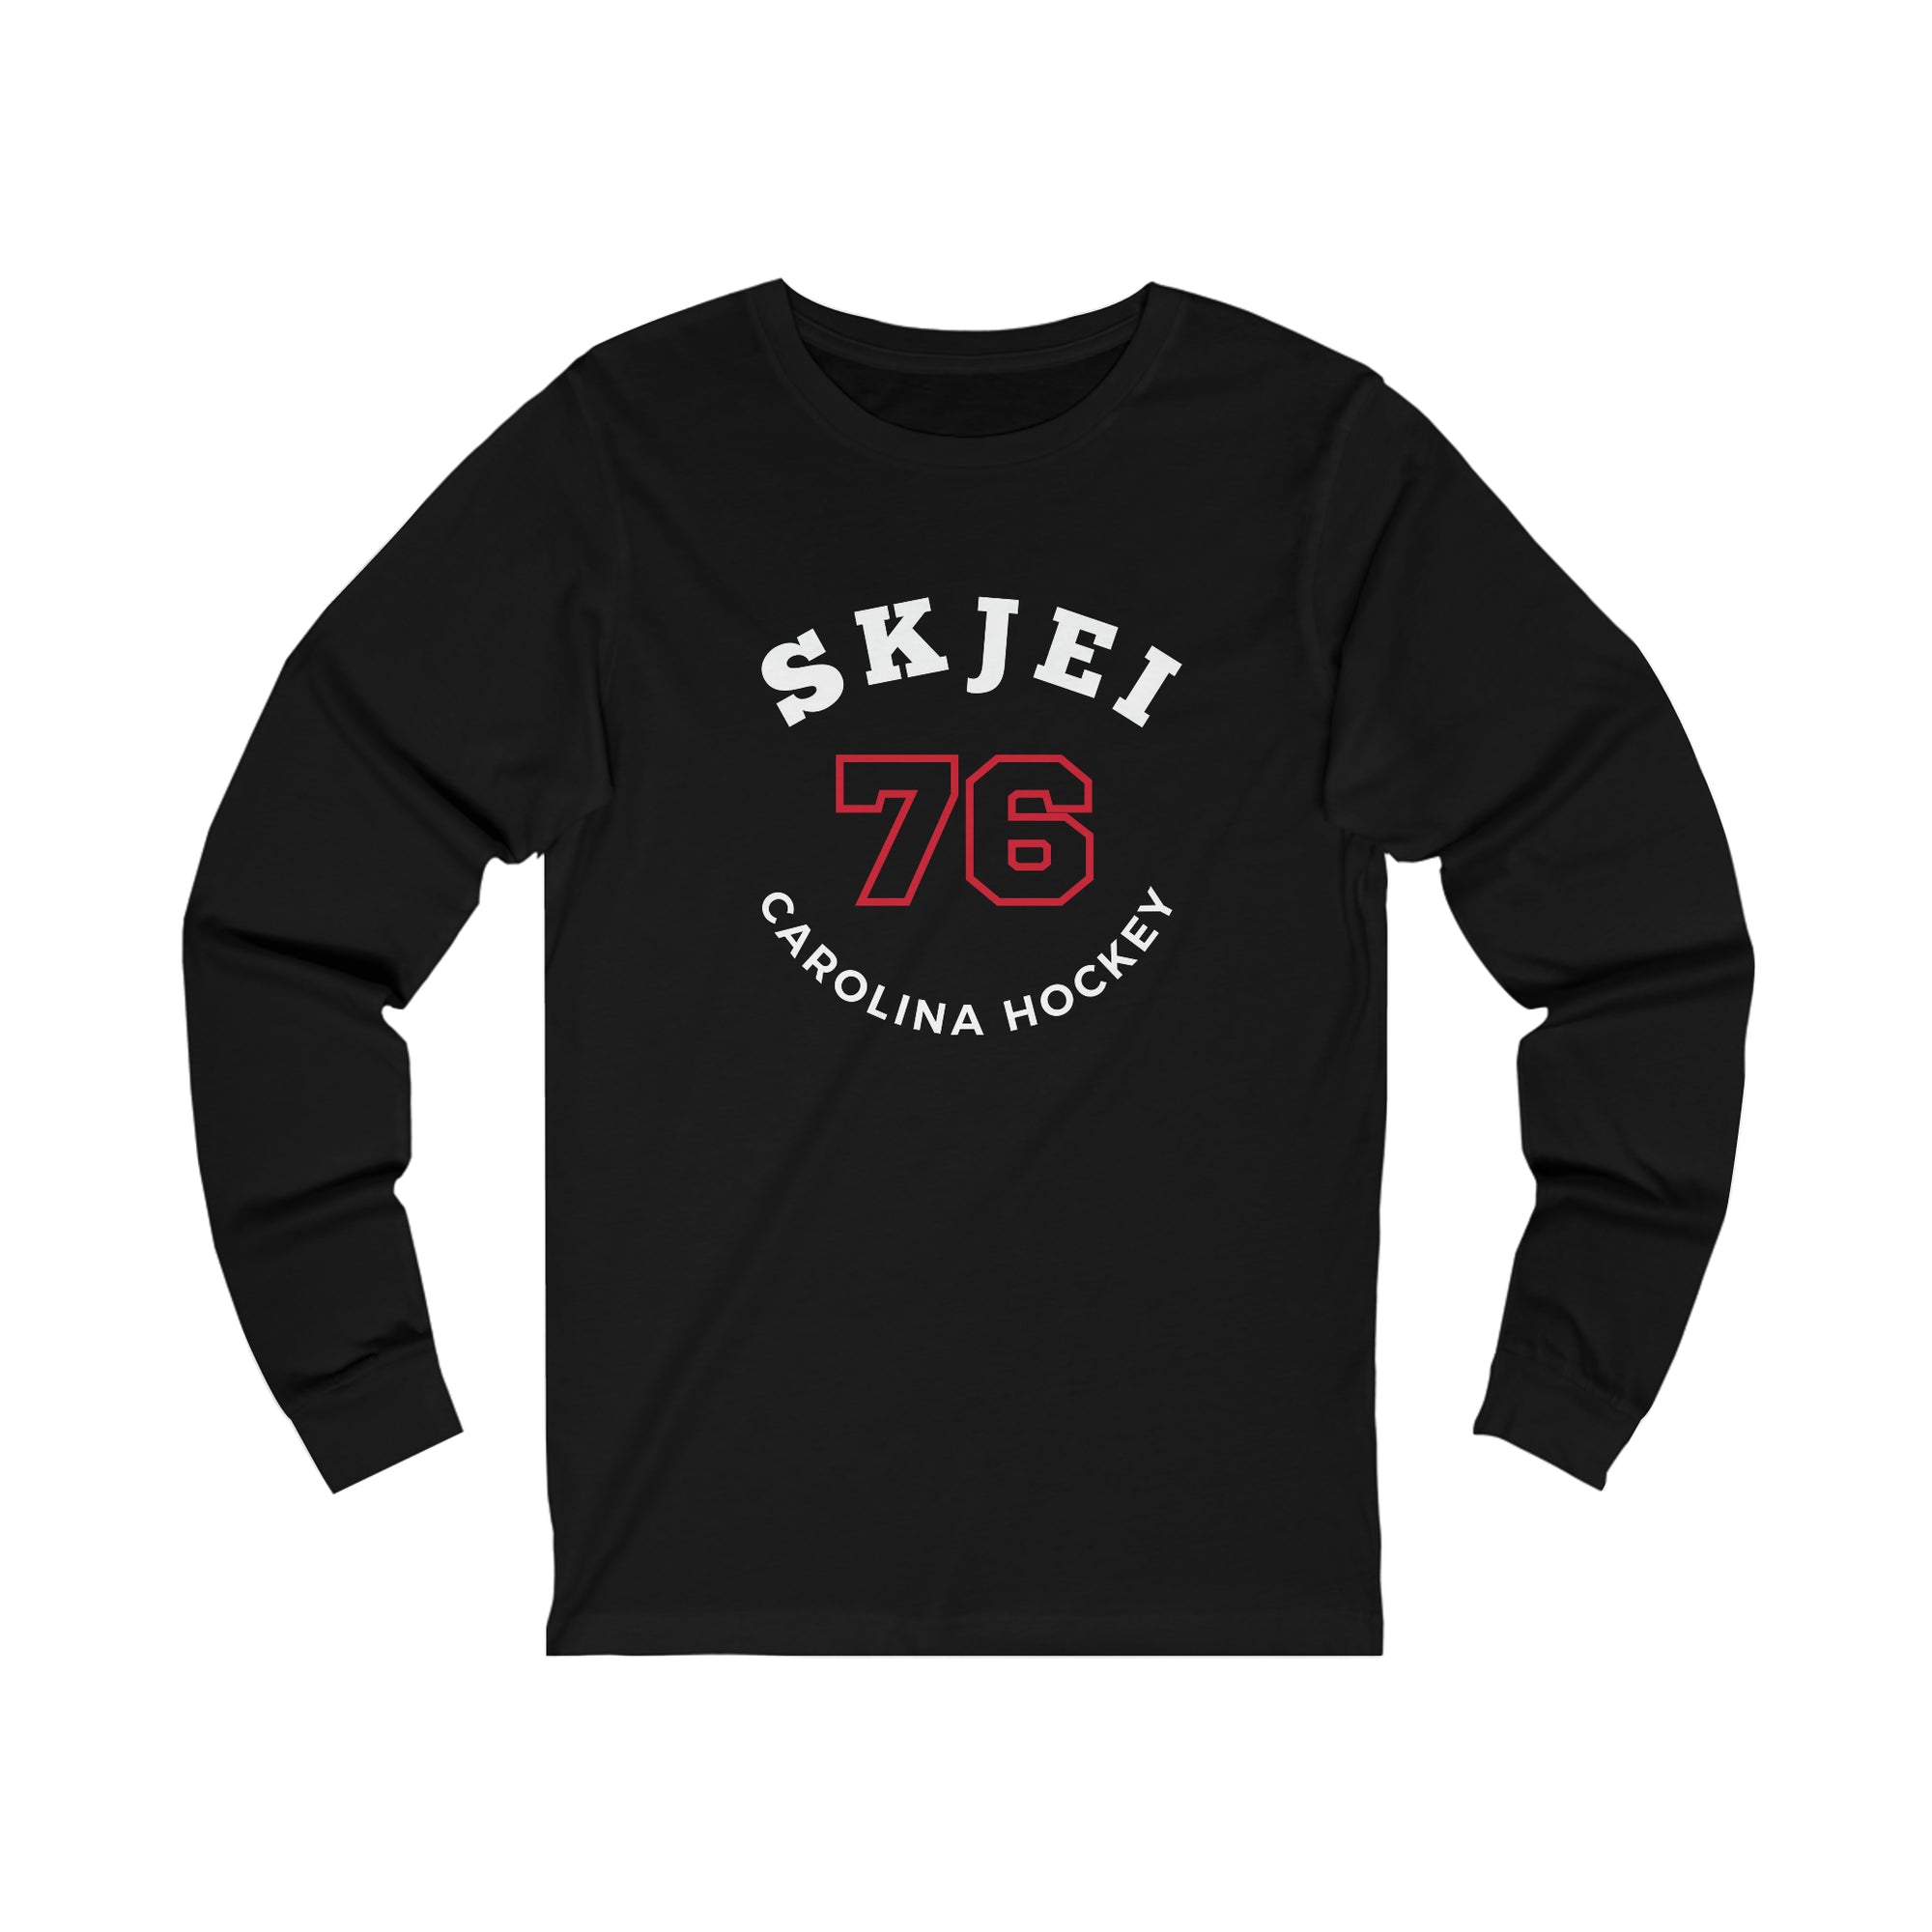 Skjei 76 Carolina Hockey Number Arch Design Unisex Jersey Long Sleeve Shirt